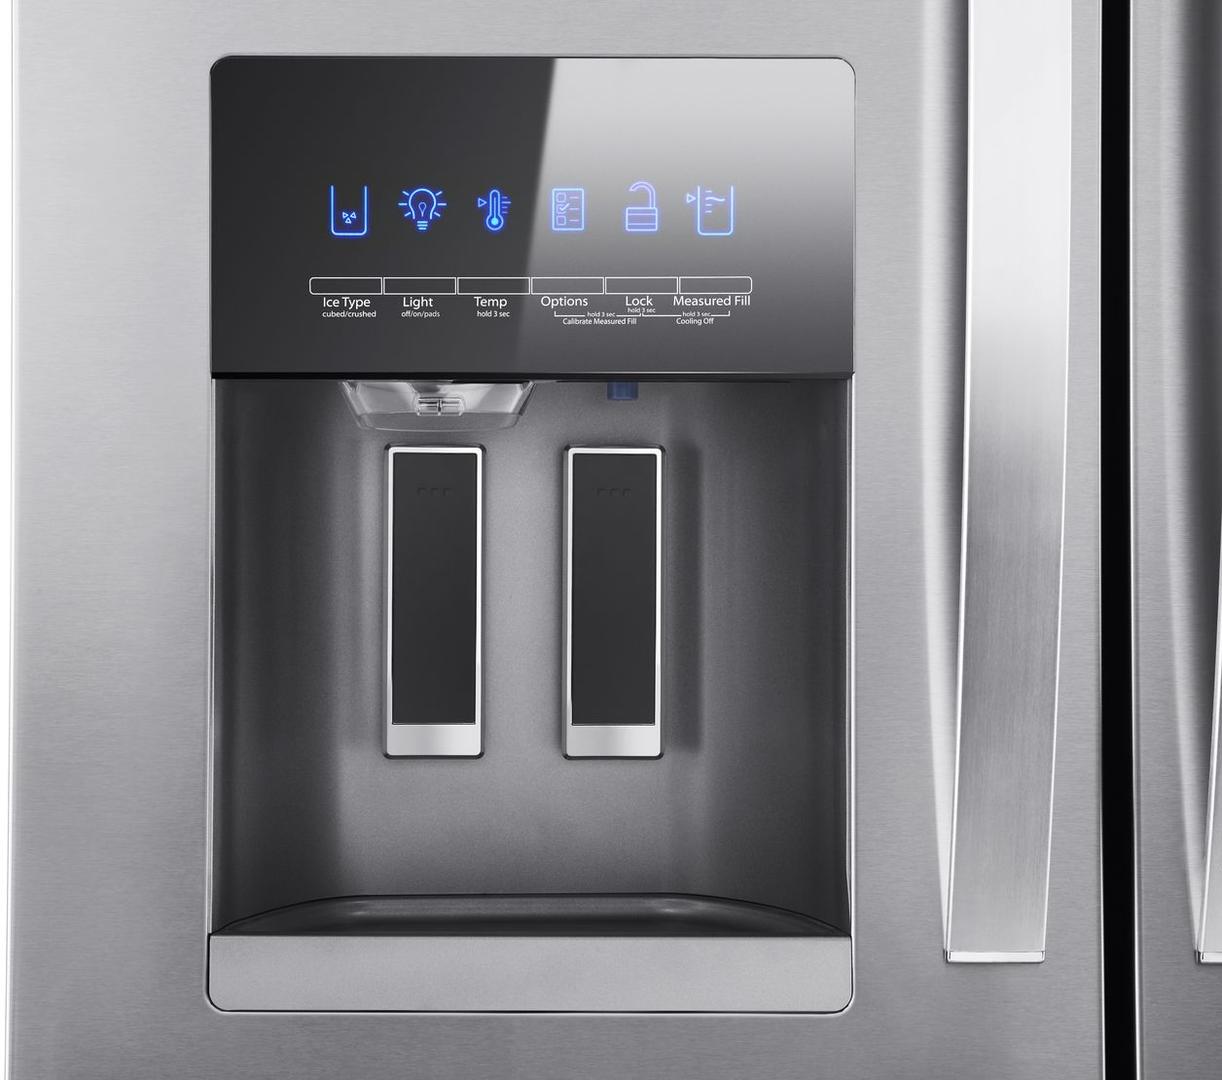 36" 25 Cu. Ft. French Door Refrigerator - Fingerprint Resistant Stainless Steel - WHIRLPOOL - WRX735SDHZ